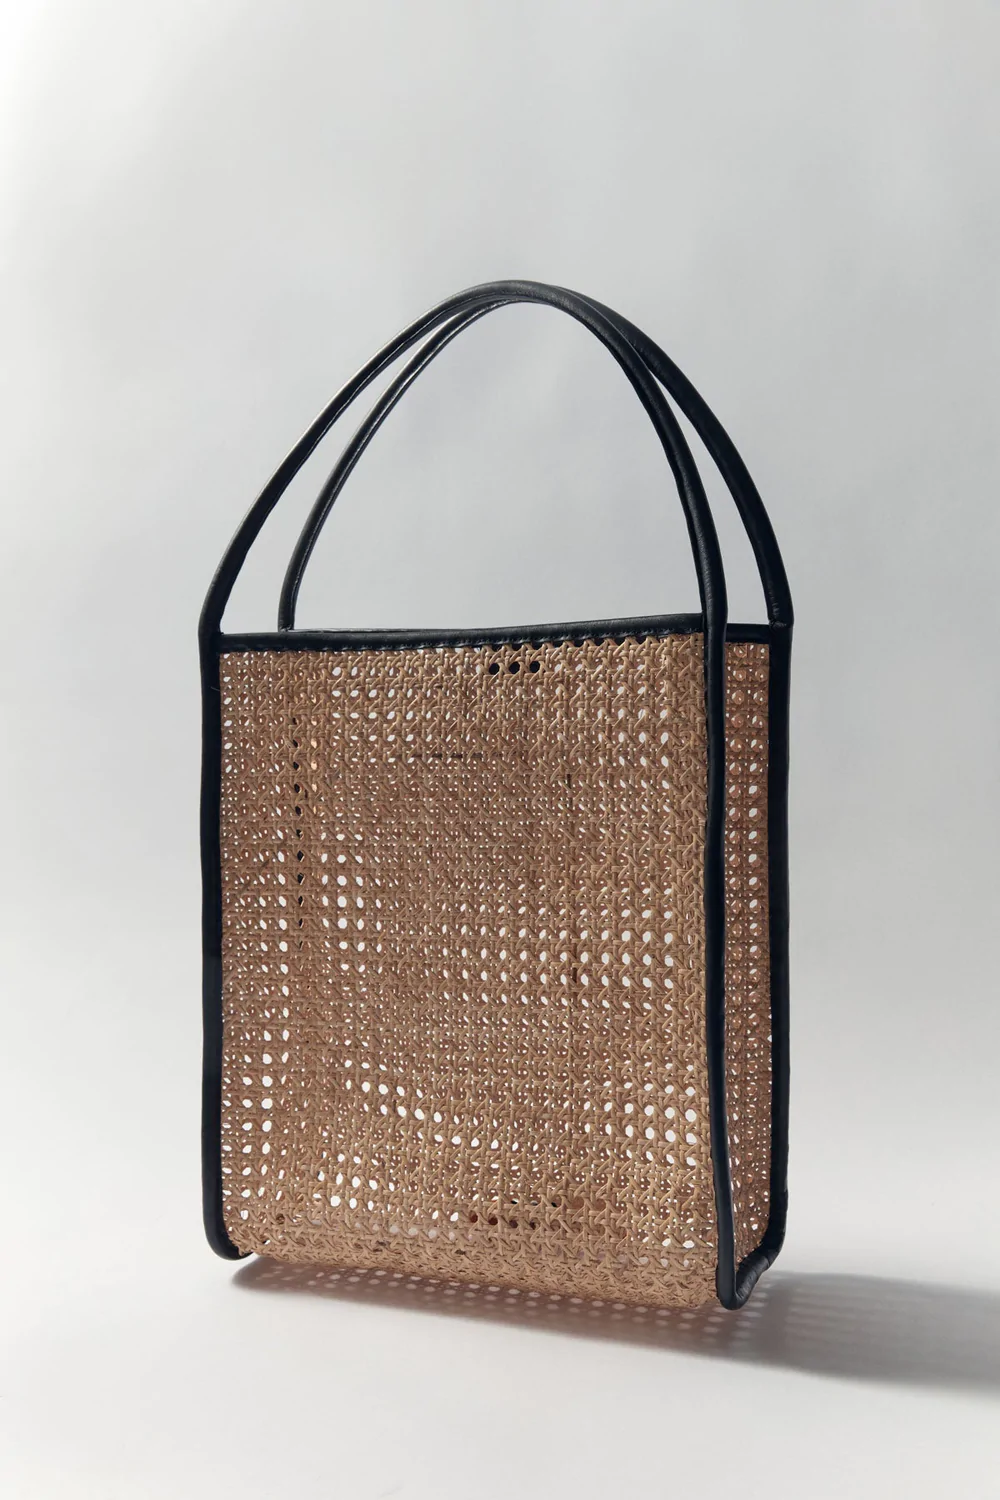 Product Image for Rattan Tote Bag, Natural